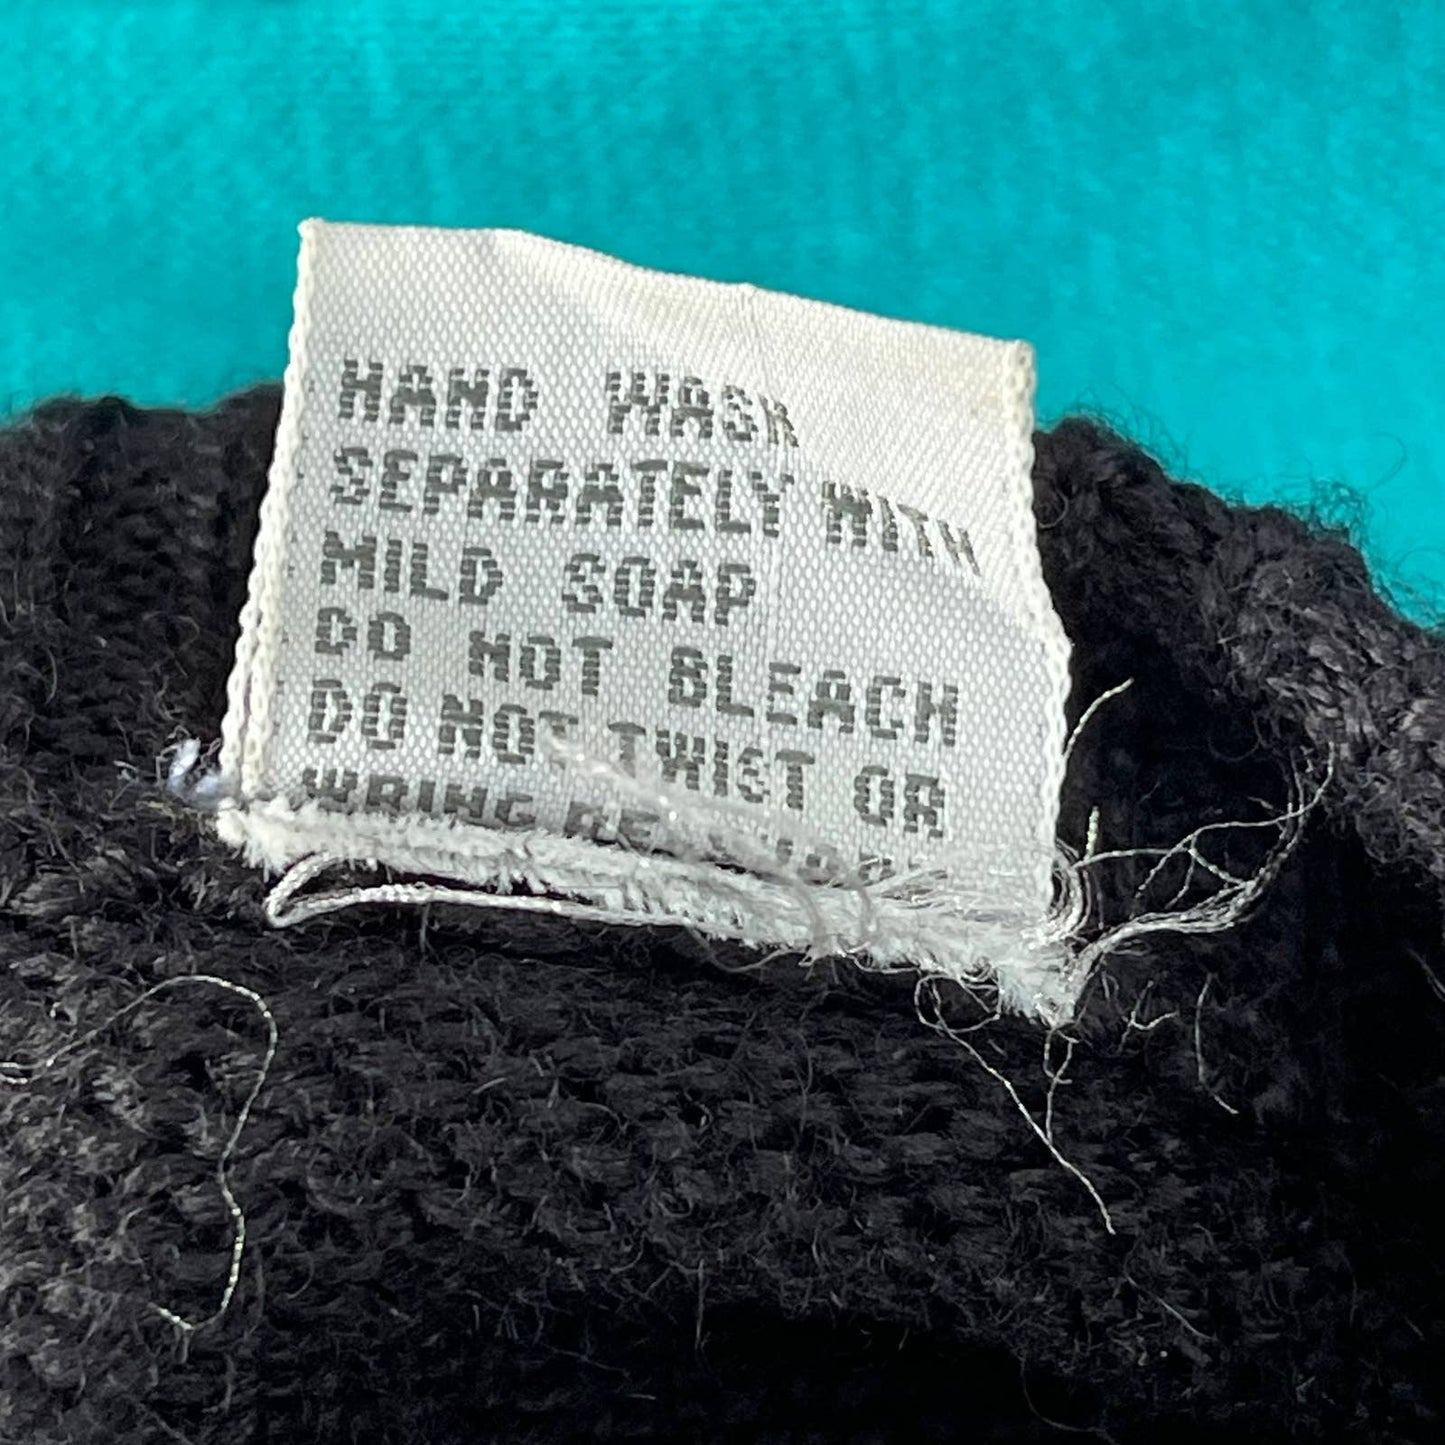 Vintage 80s Black Sequin Cardigan Sweater Buttons Wool Blend Tony Lambert Size M